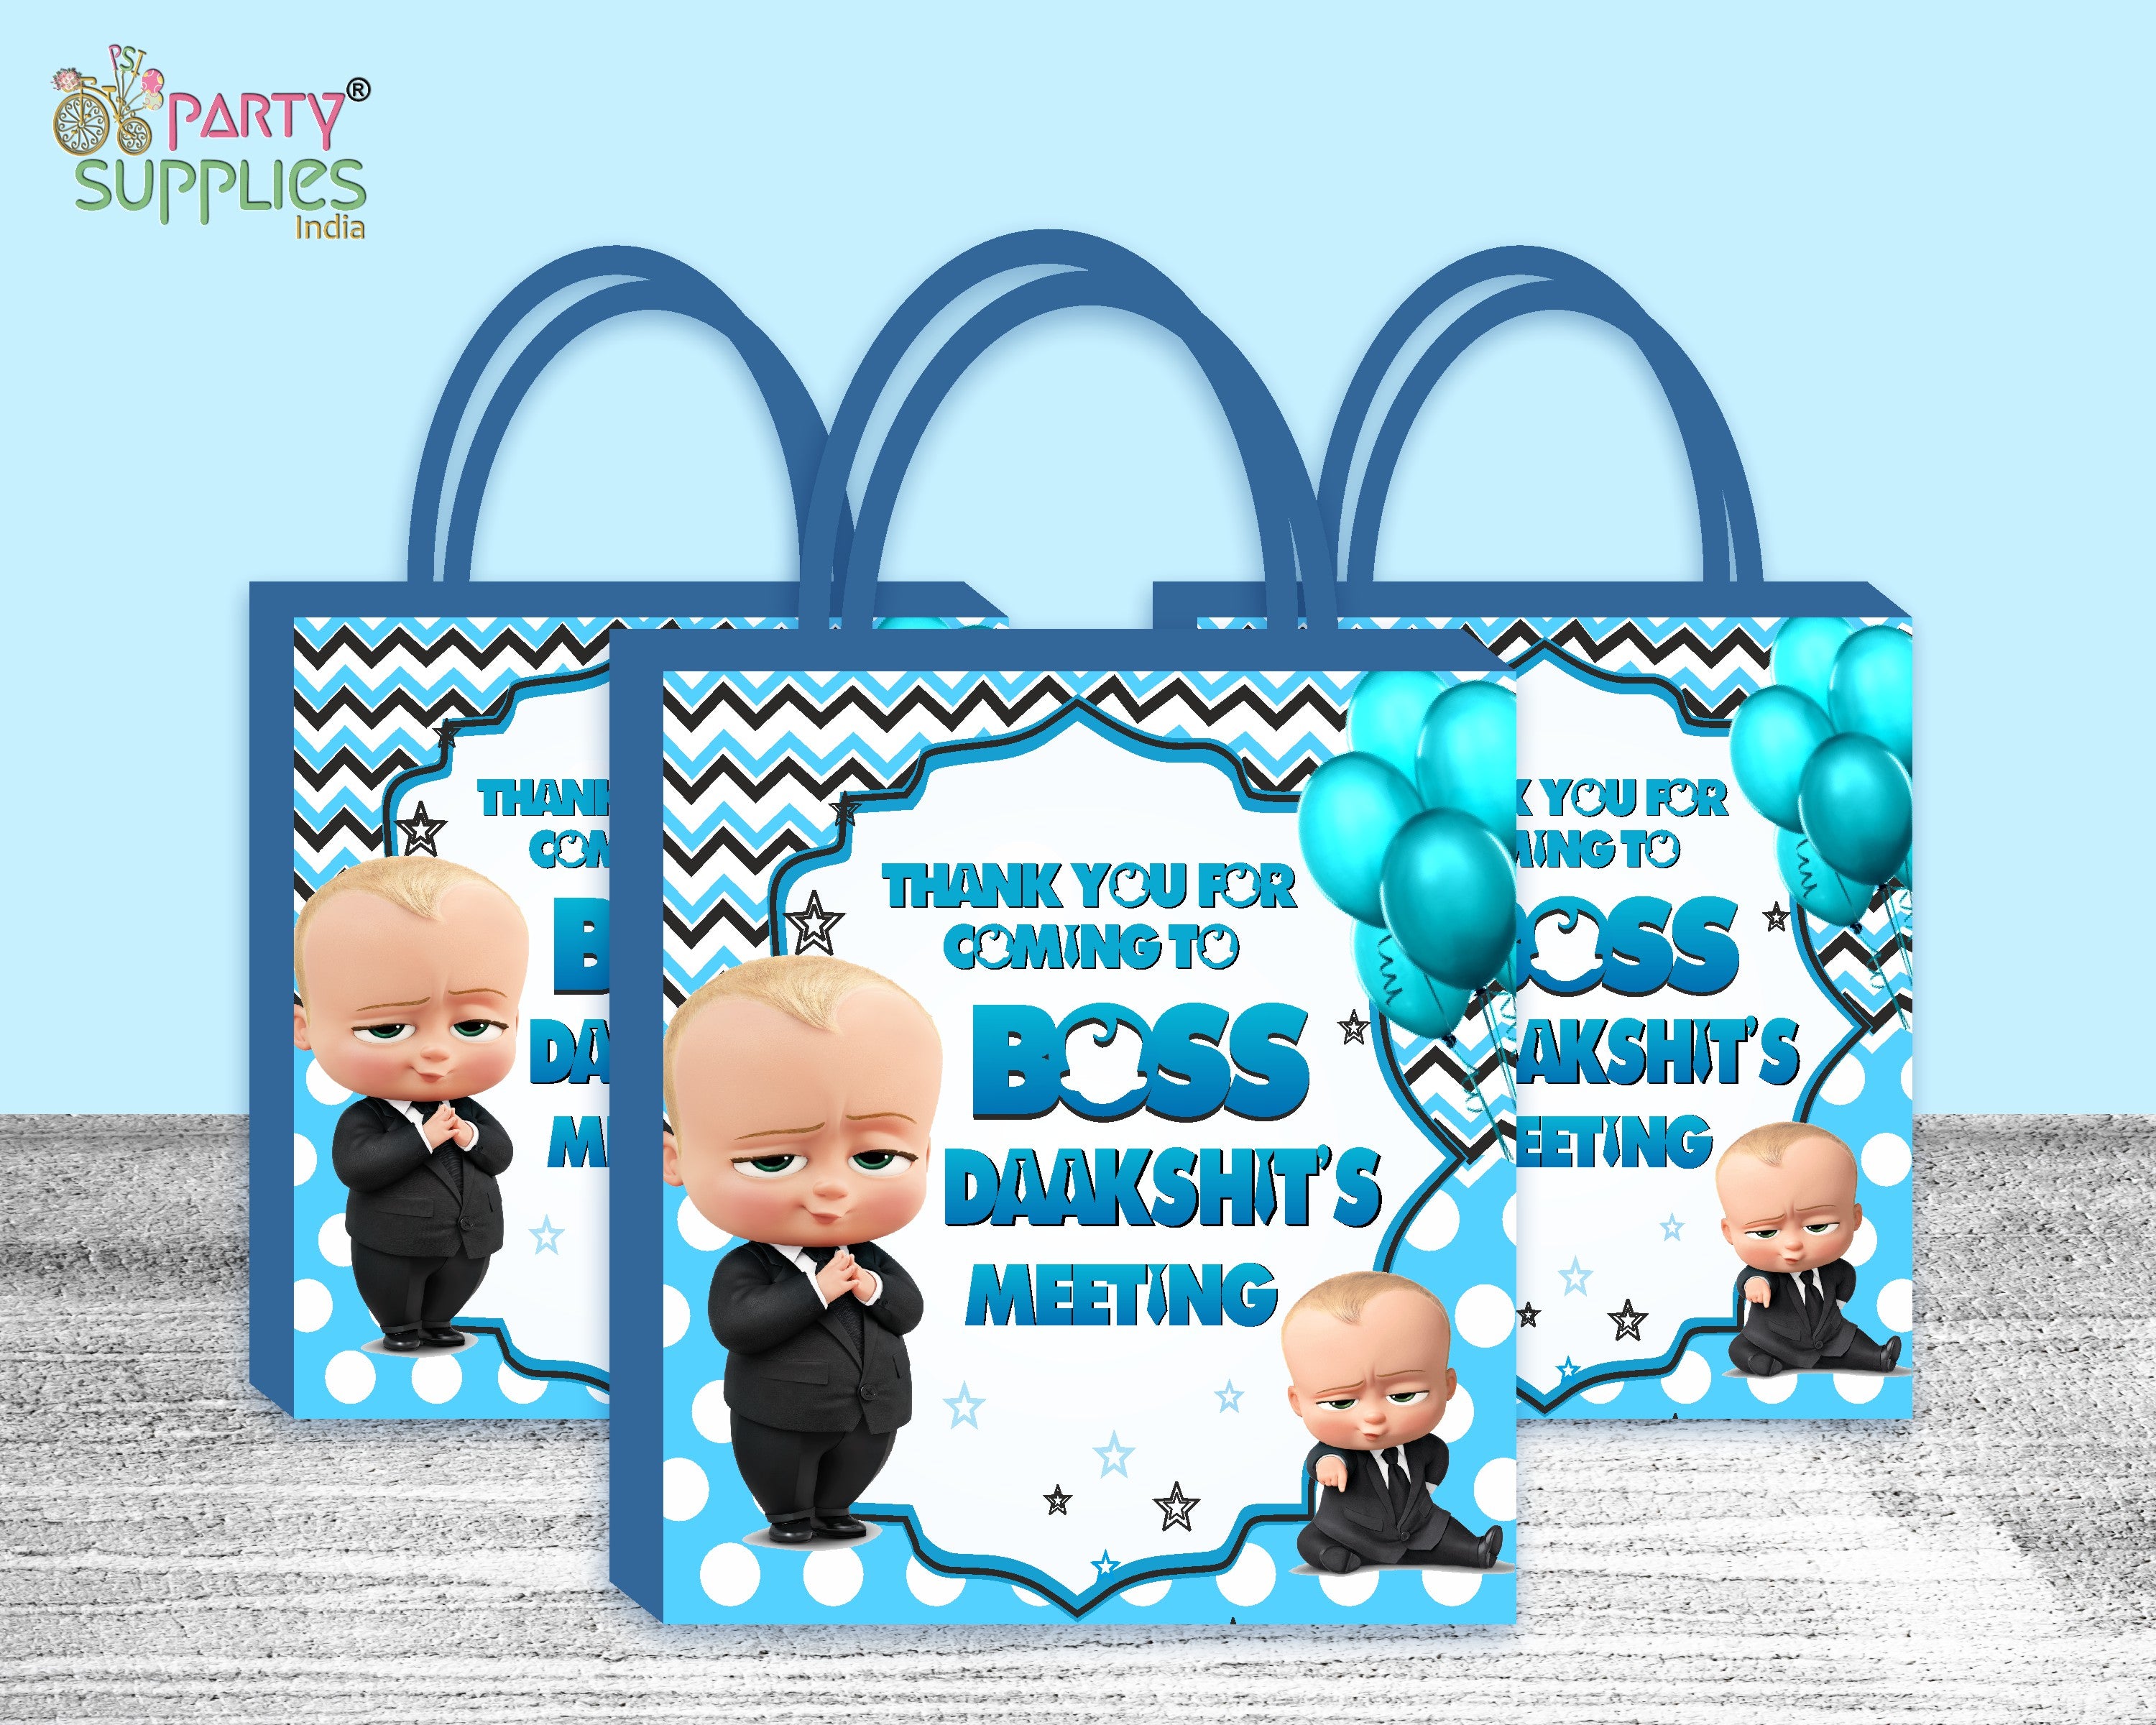 PSI Boss Baby Theme Return Gift Bag